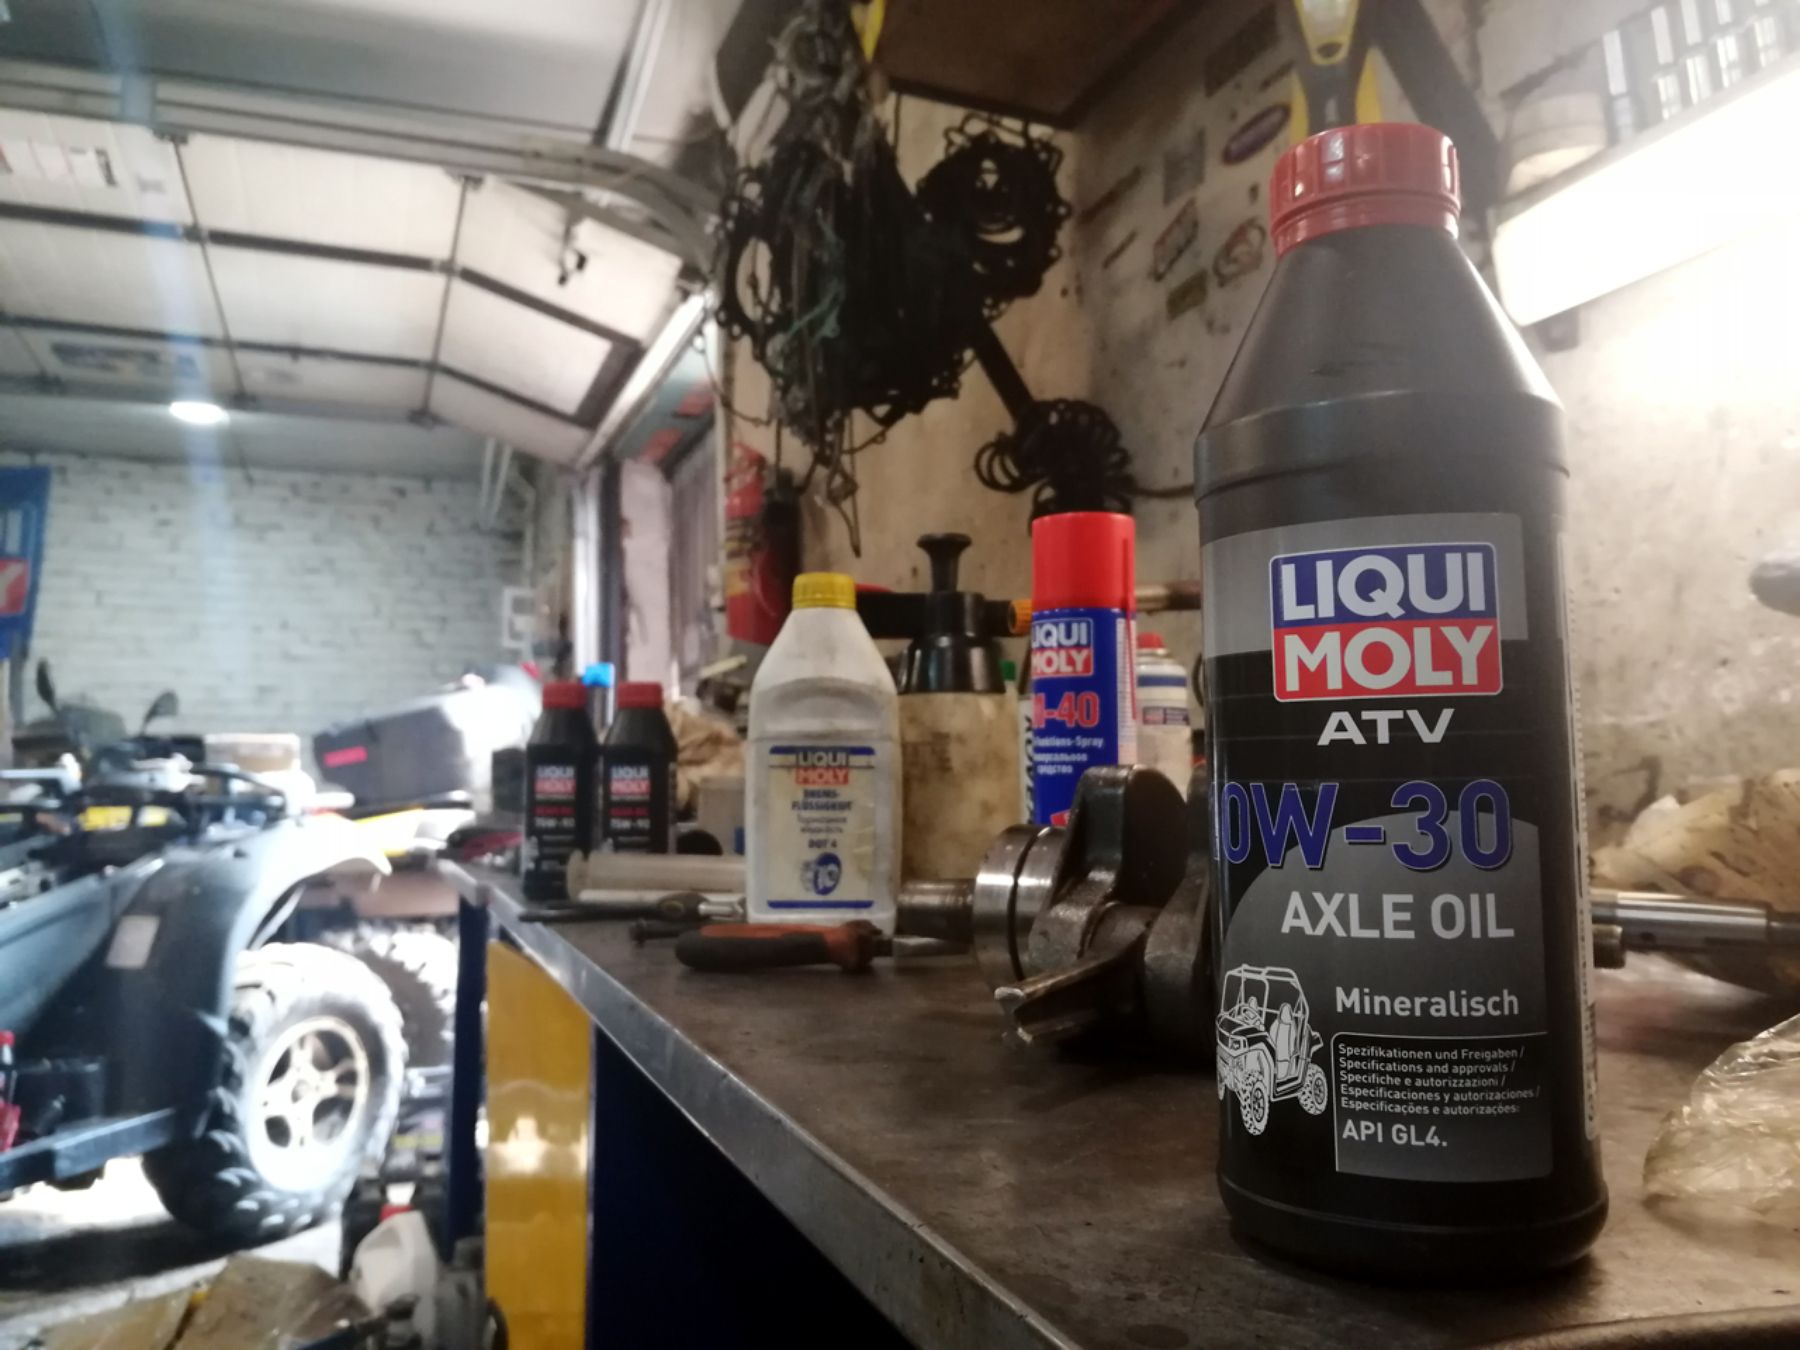 Liqui Moly ATV Axle Oil